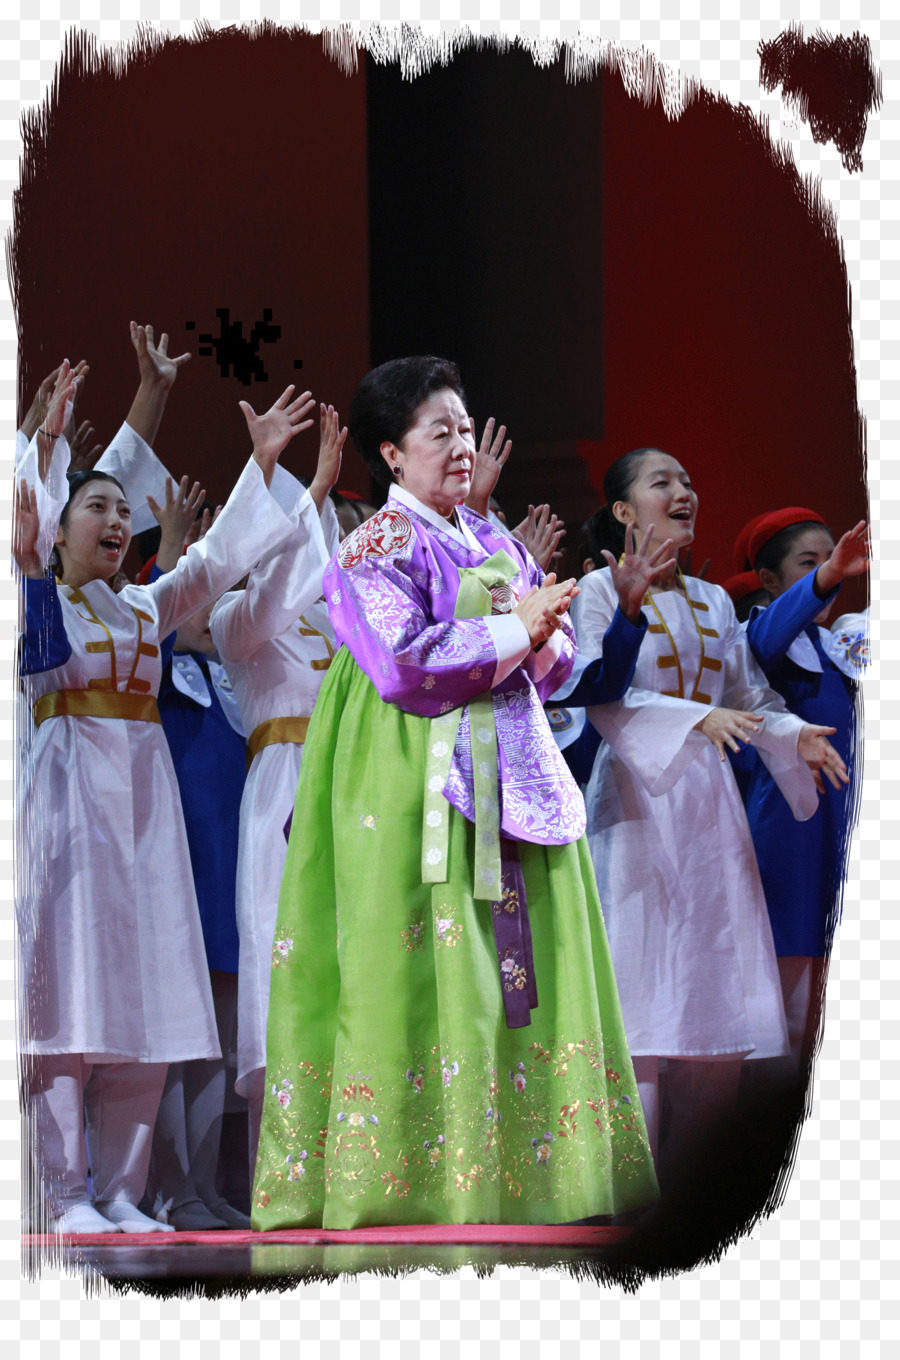 Kultur, Vereinigung, Kirche, Tradition, Japan, Süd-Korea - HJC